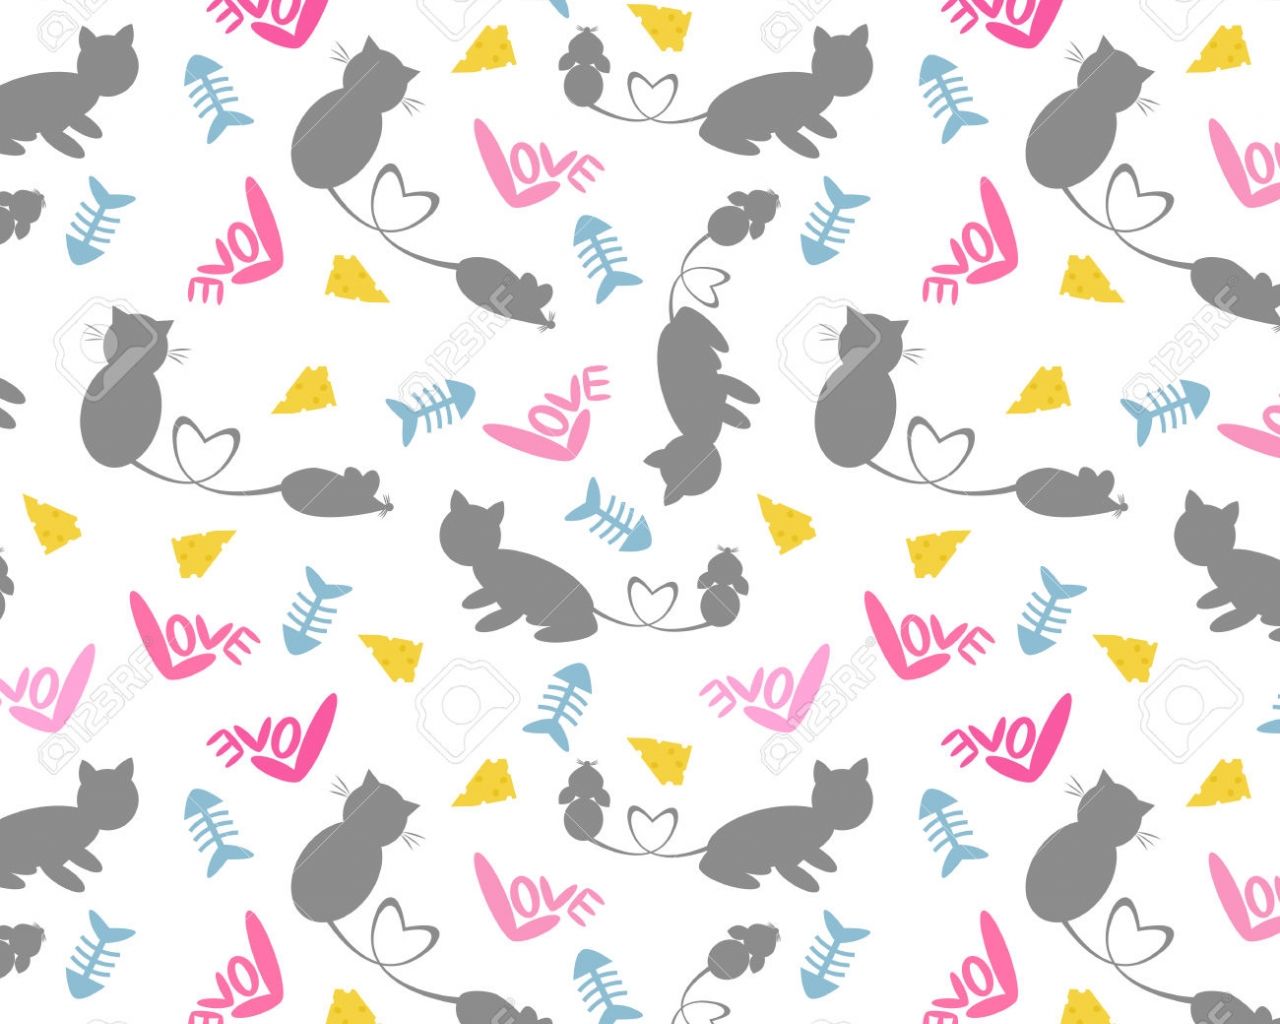 Cute Cartoon Cat Desktop Wallpapers - Wallpaper Cave